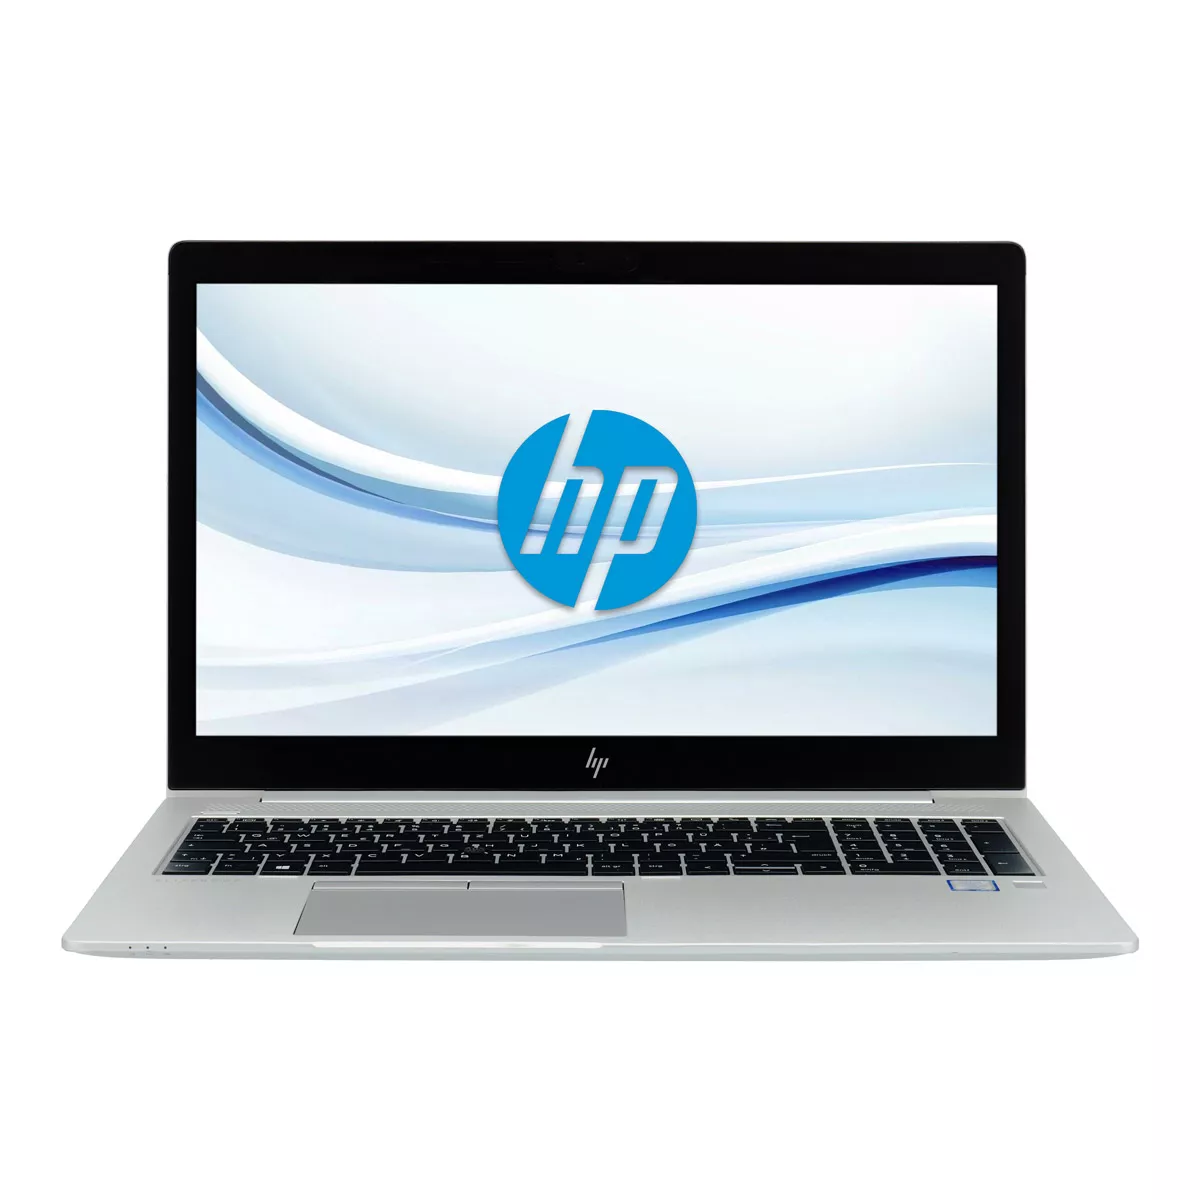 HP EliteBook 850 G5 Core i5 8250U Full-HD Touch 16 GB DDR4 240 GB M.2 nVME SSD Webcam A